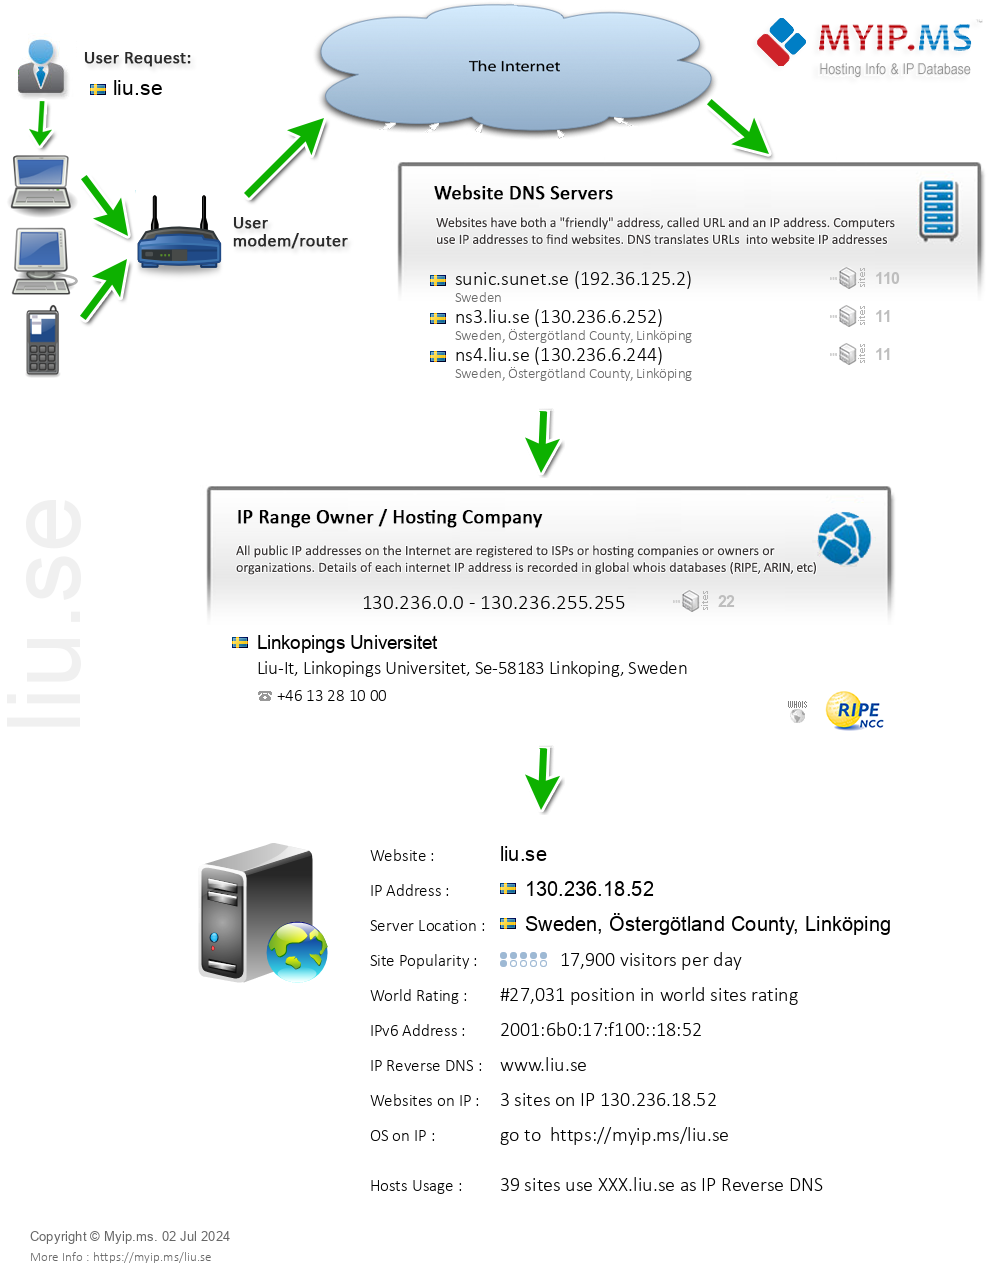 Liu.se - Website Hosting Visual IP Diagram